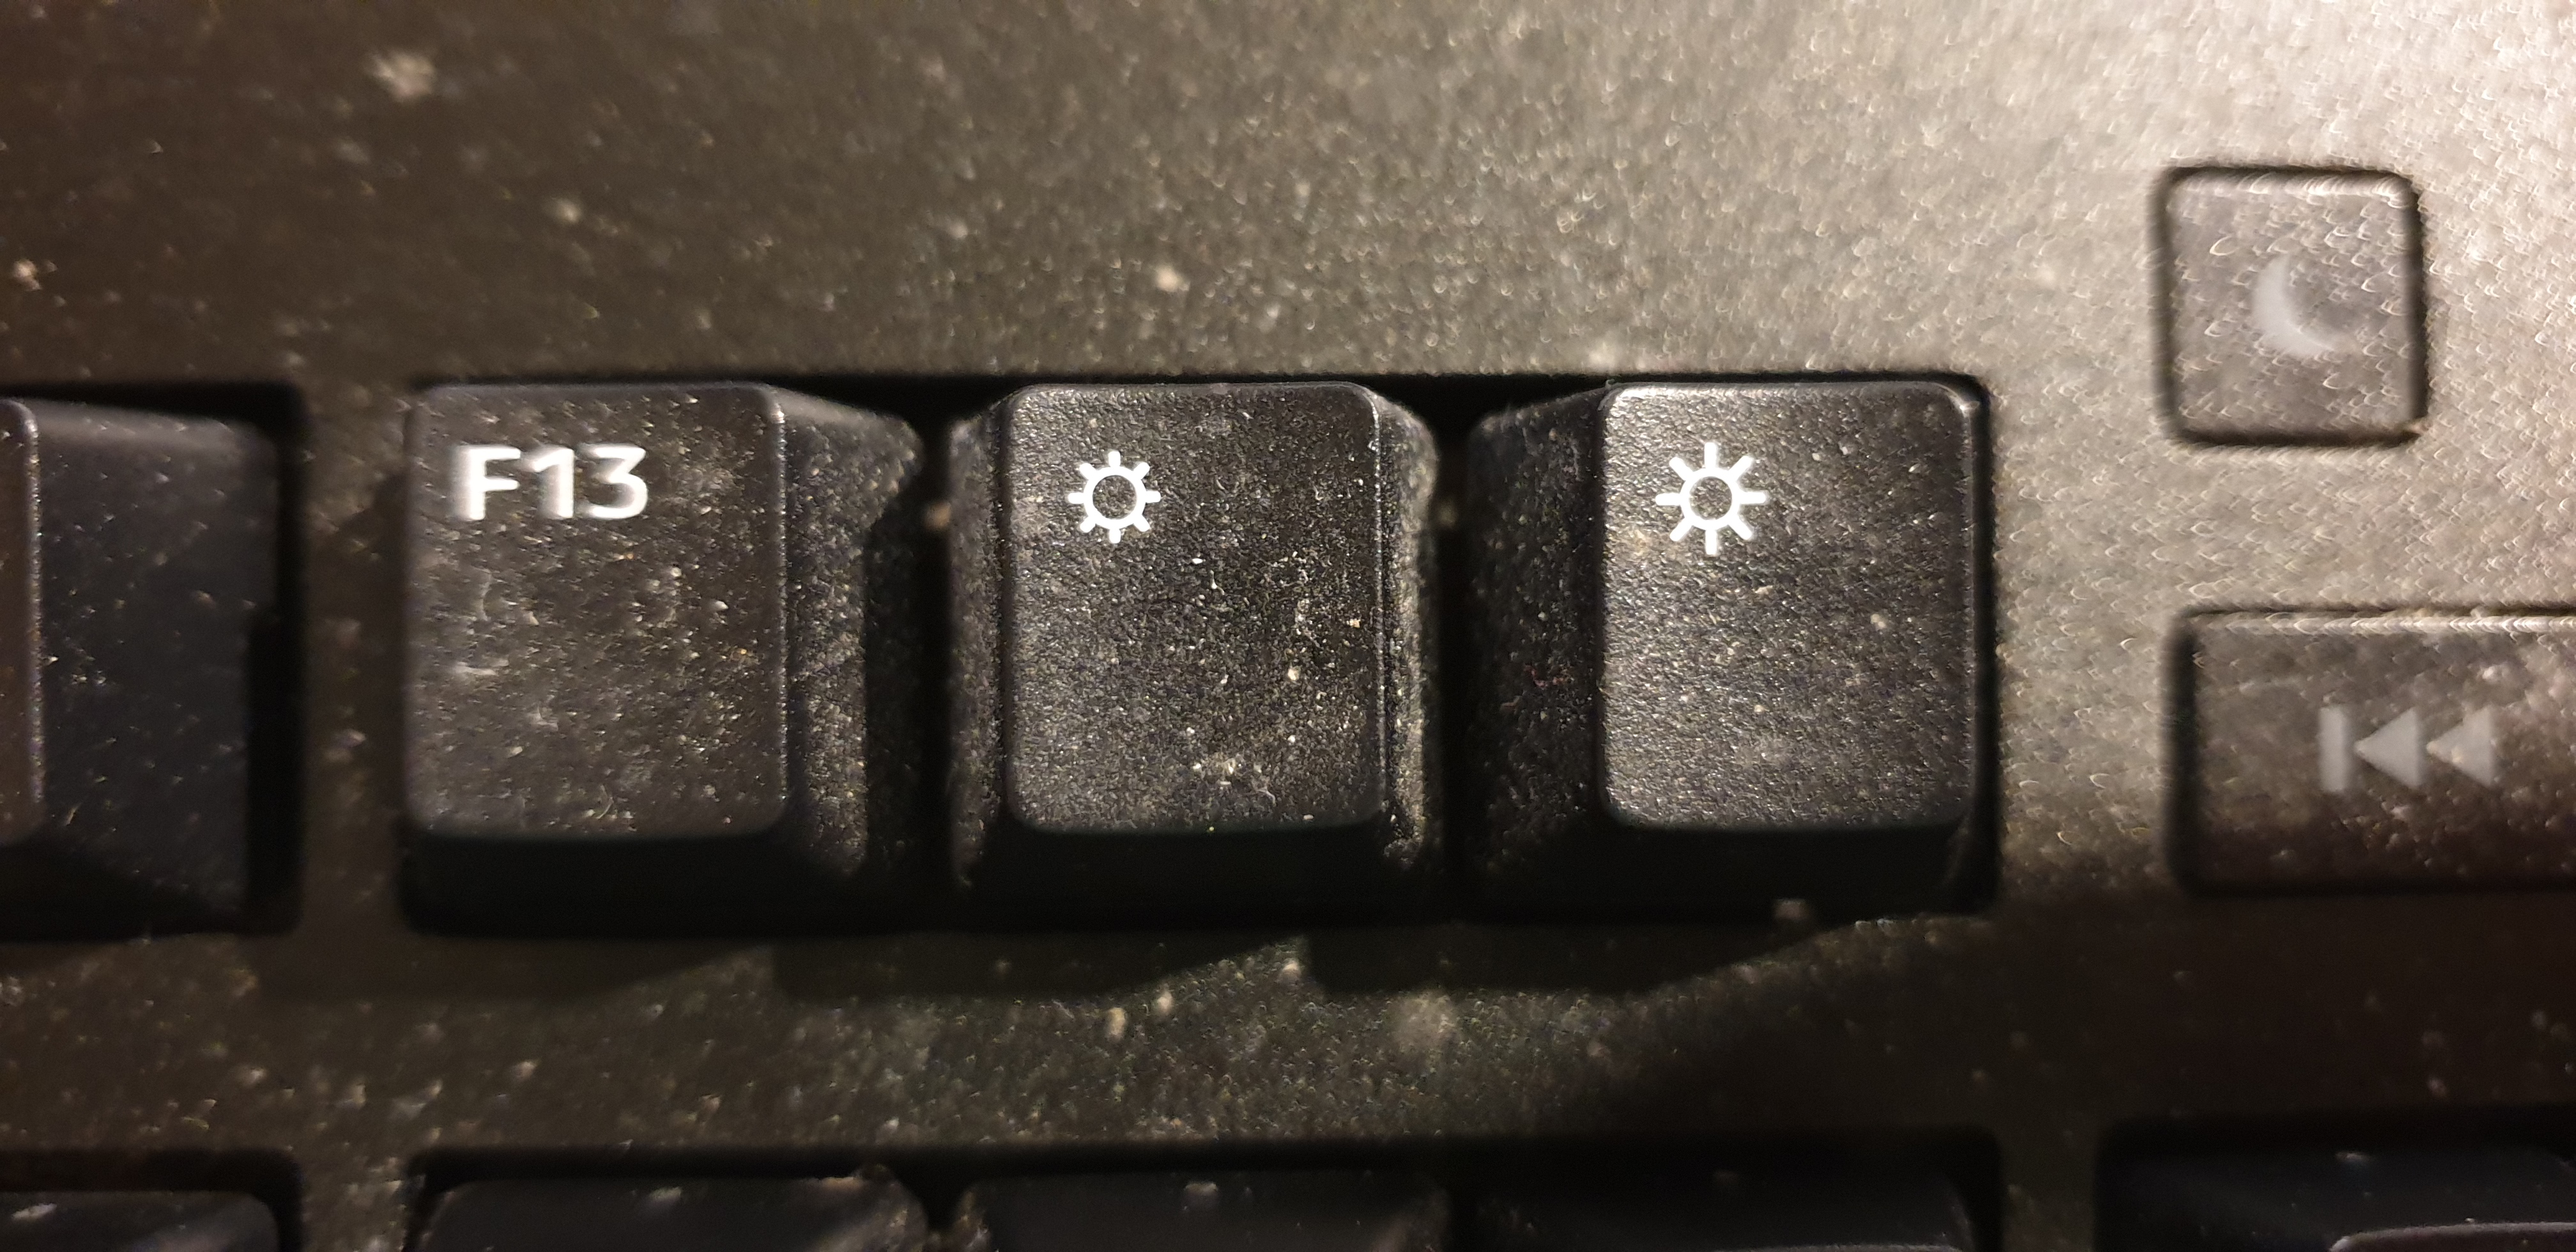 F13, Lower Brightness, and Raise Brightness keys on Dan's keyboard